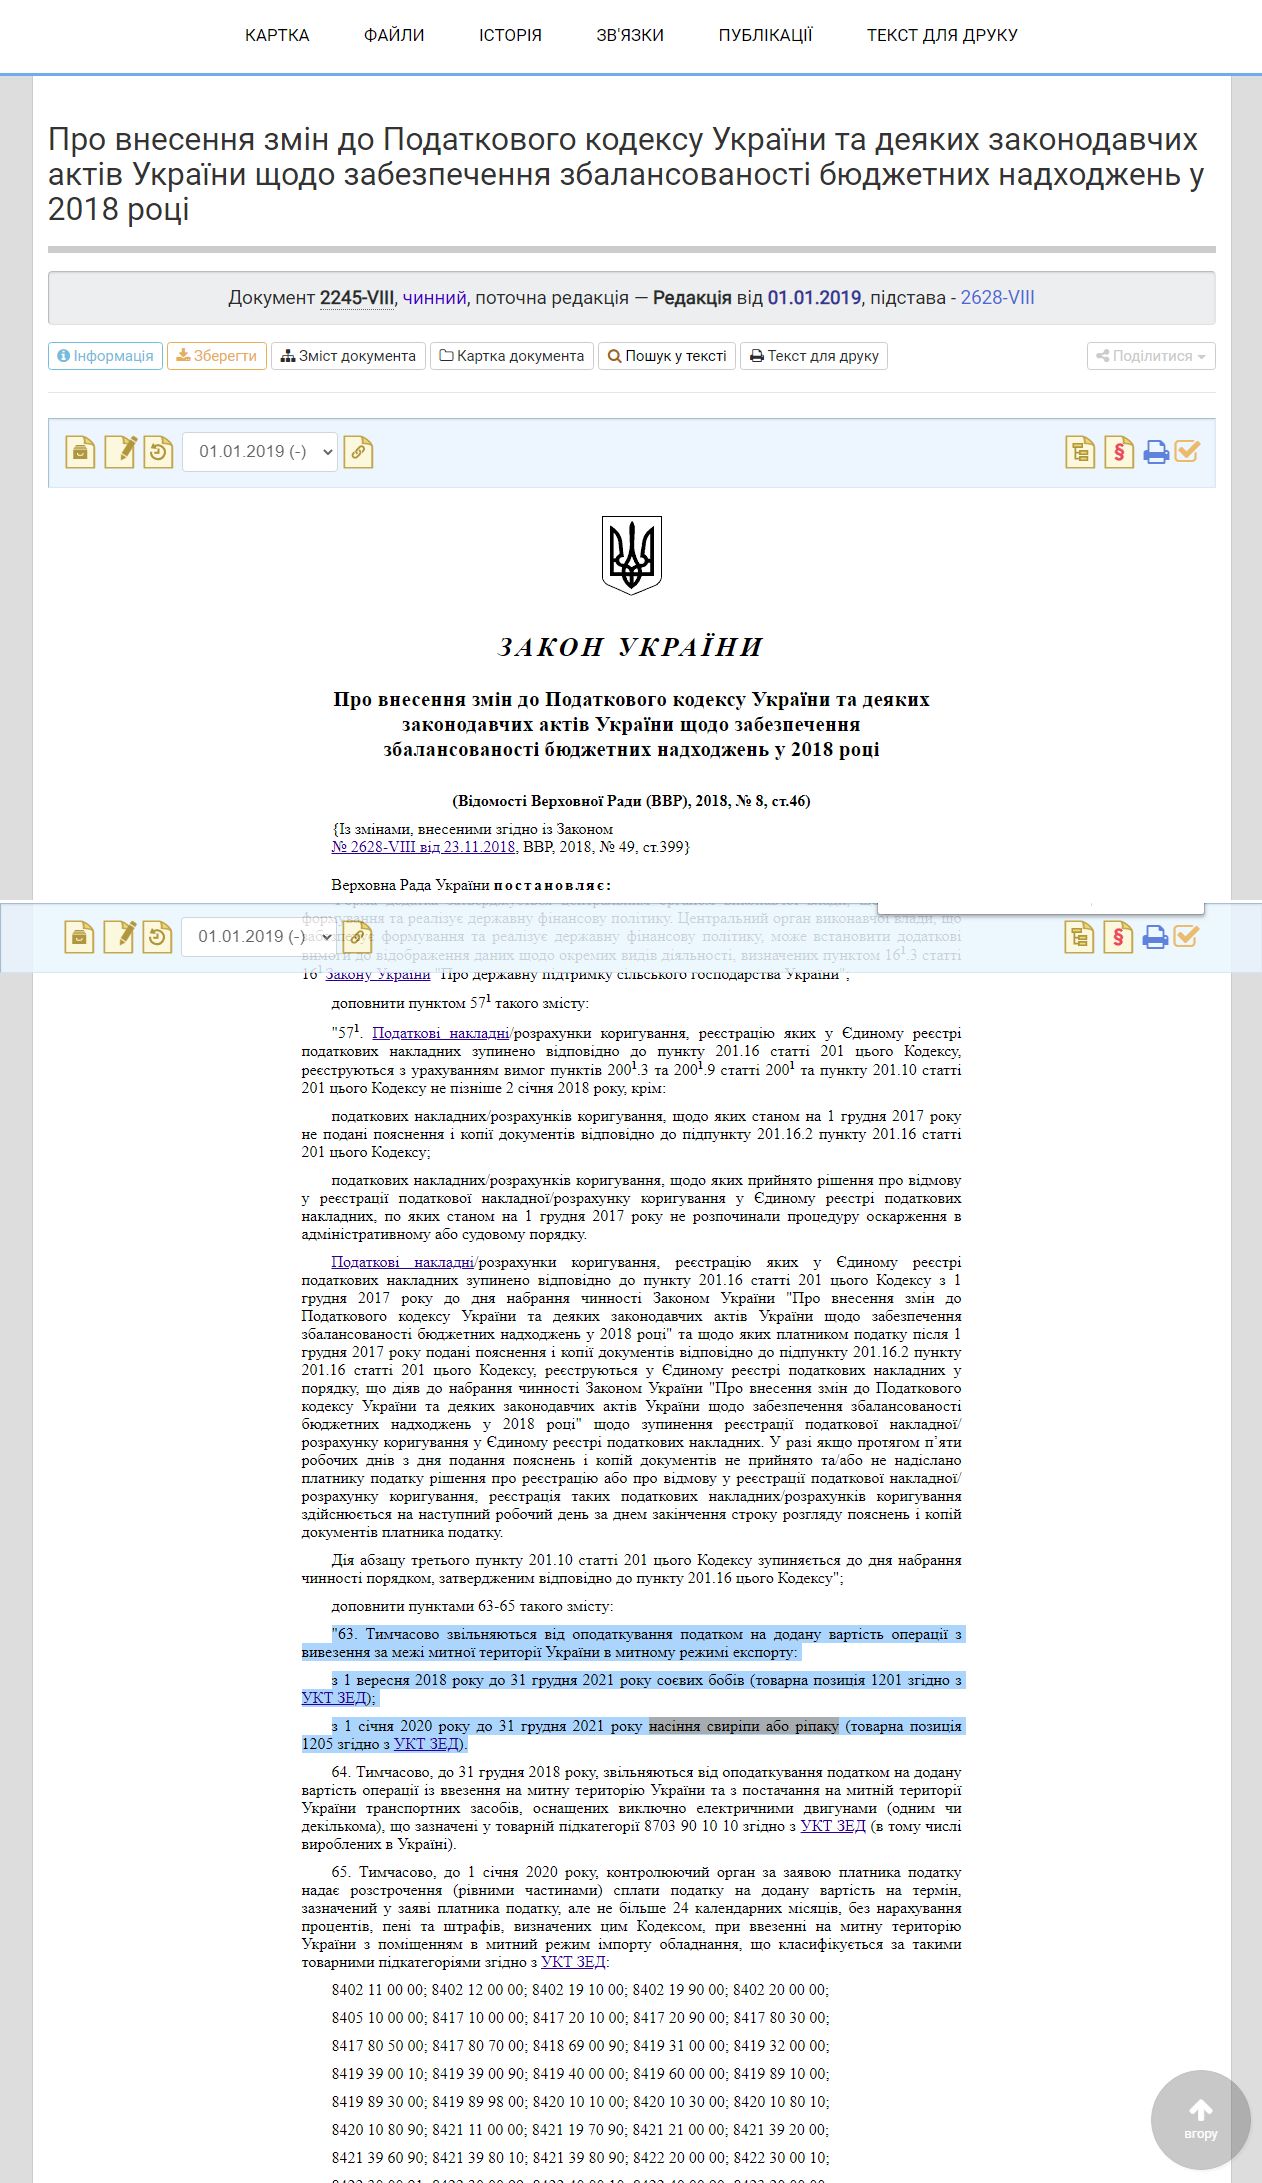 https://zakon.rada.gov.ua/laws/show/2245-19